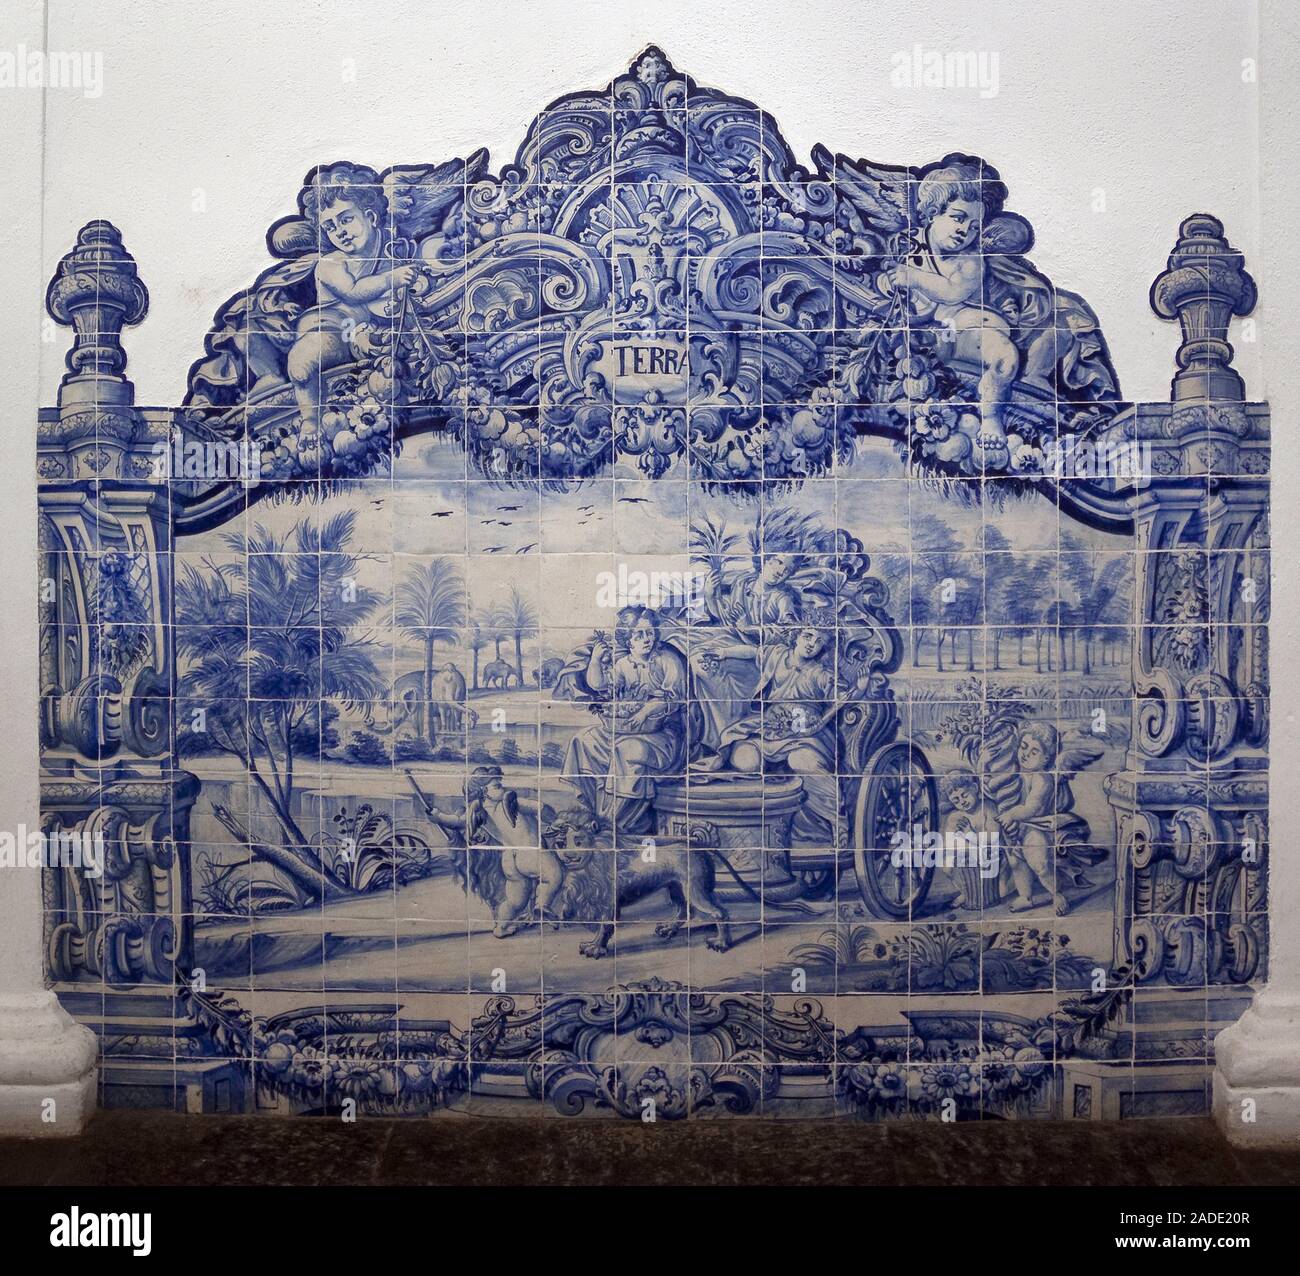 Allegorie de la terre - Azulejos, faience peinte, 18e siecle (Earth, azulejos 18th century) - Universite d'Evora, Portugal - Stock Photo